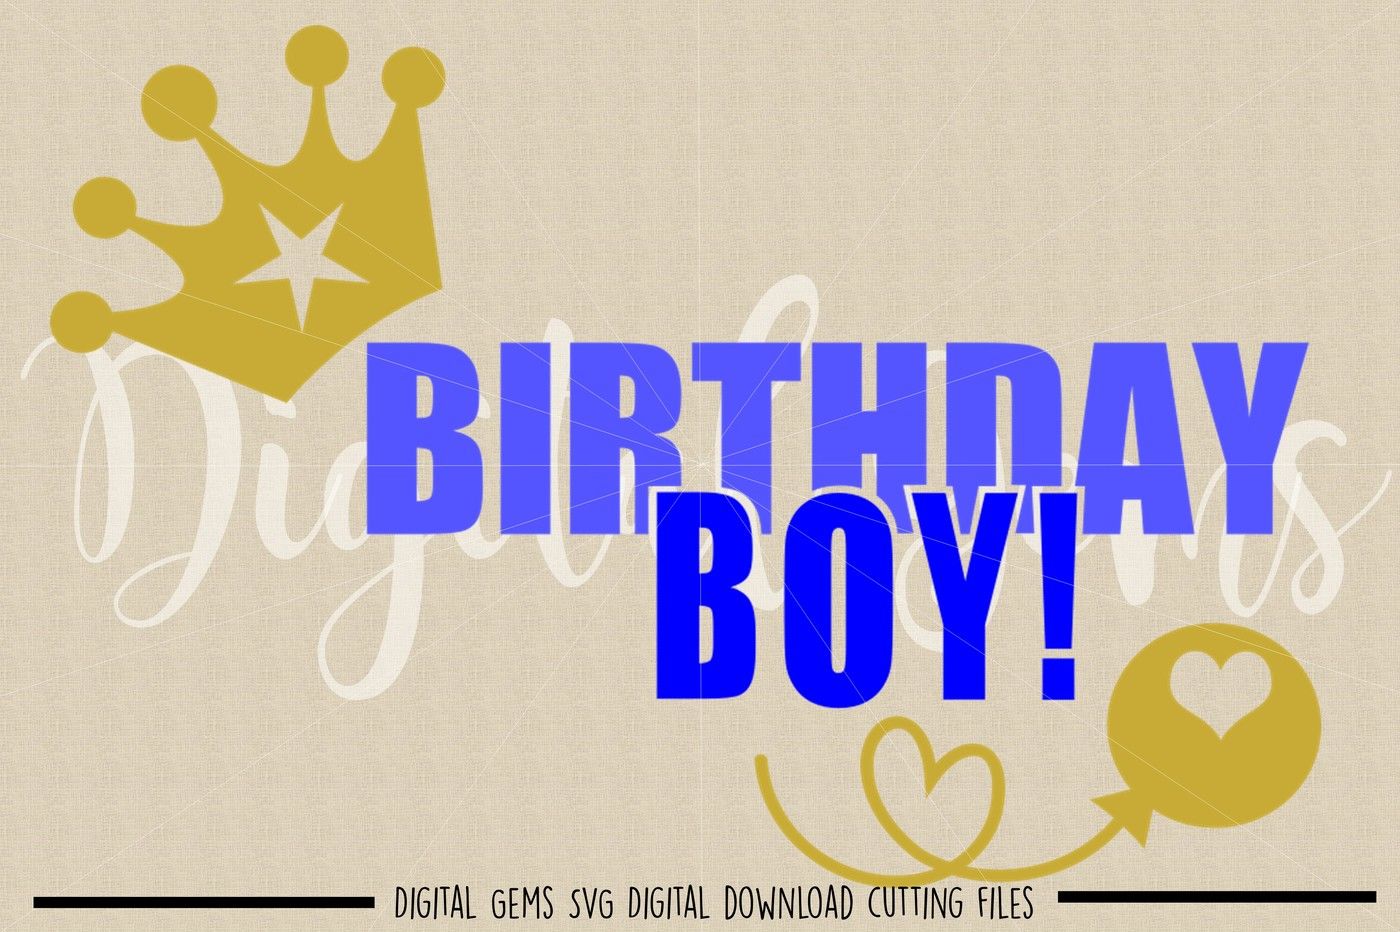 Birthday Boy Svg Dxf Eps Png Files By Digital Gems Thehungryjpeg Com